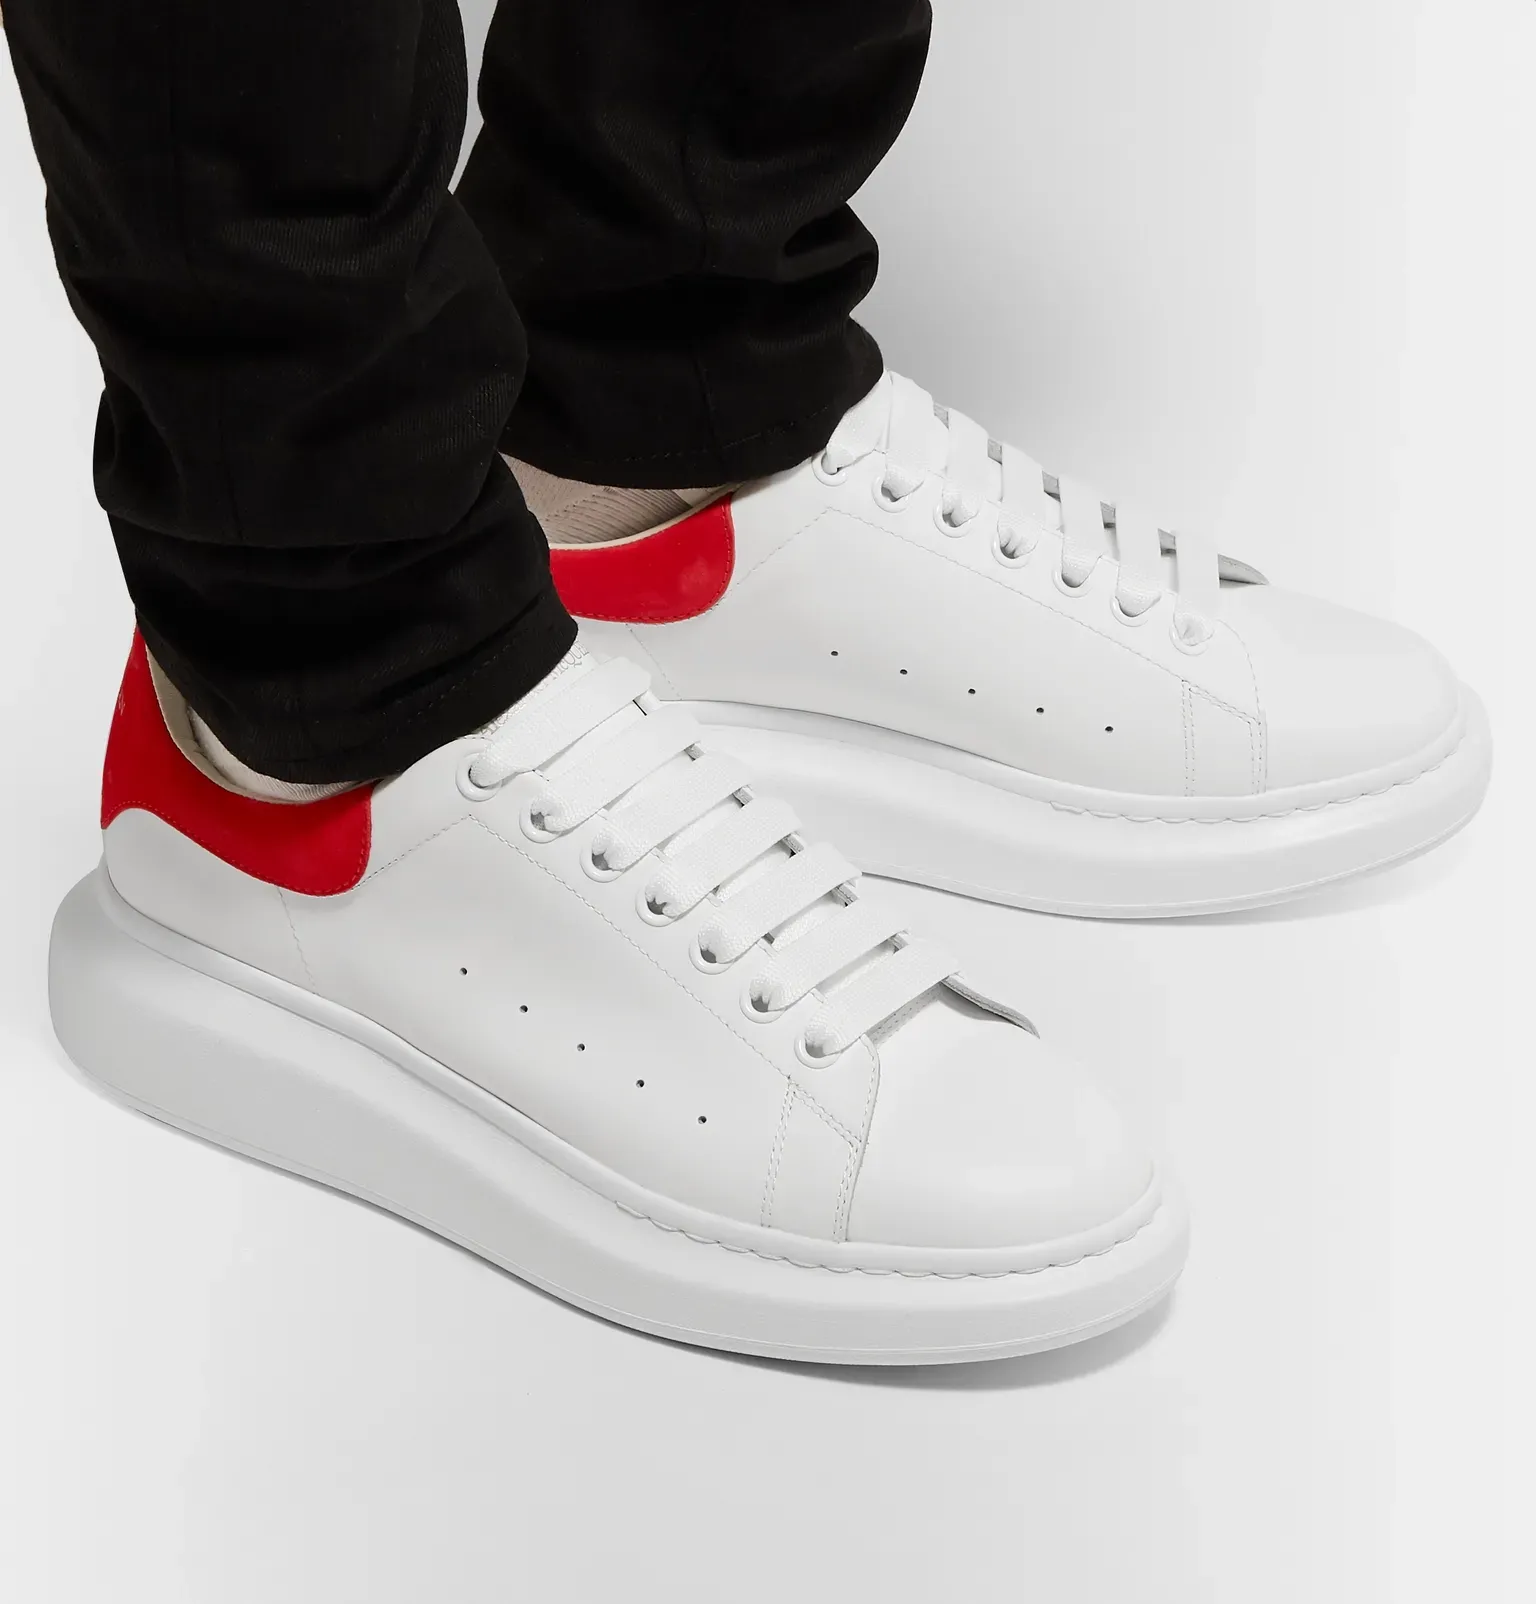 Mua Giày Sneaker Alexander McQueen Red Suede Oversized Trắng Đỏ, Giá tốt 2